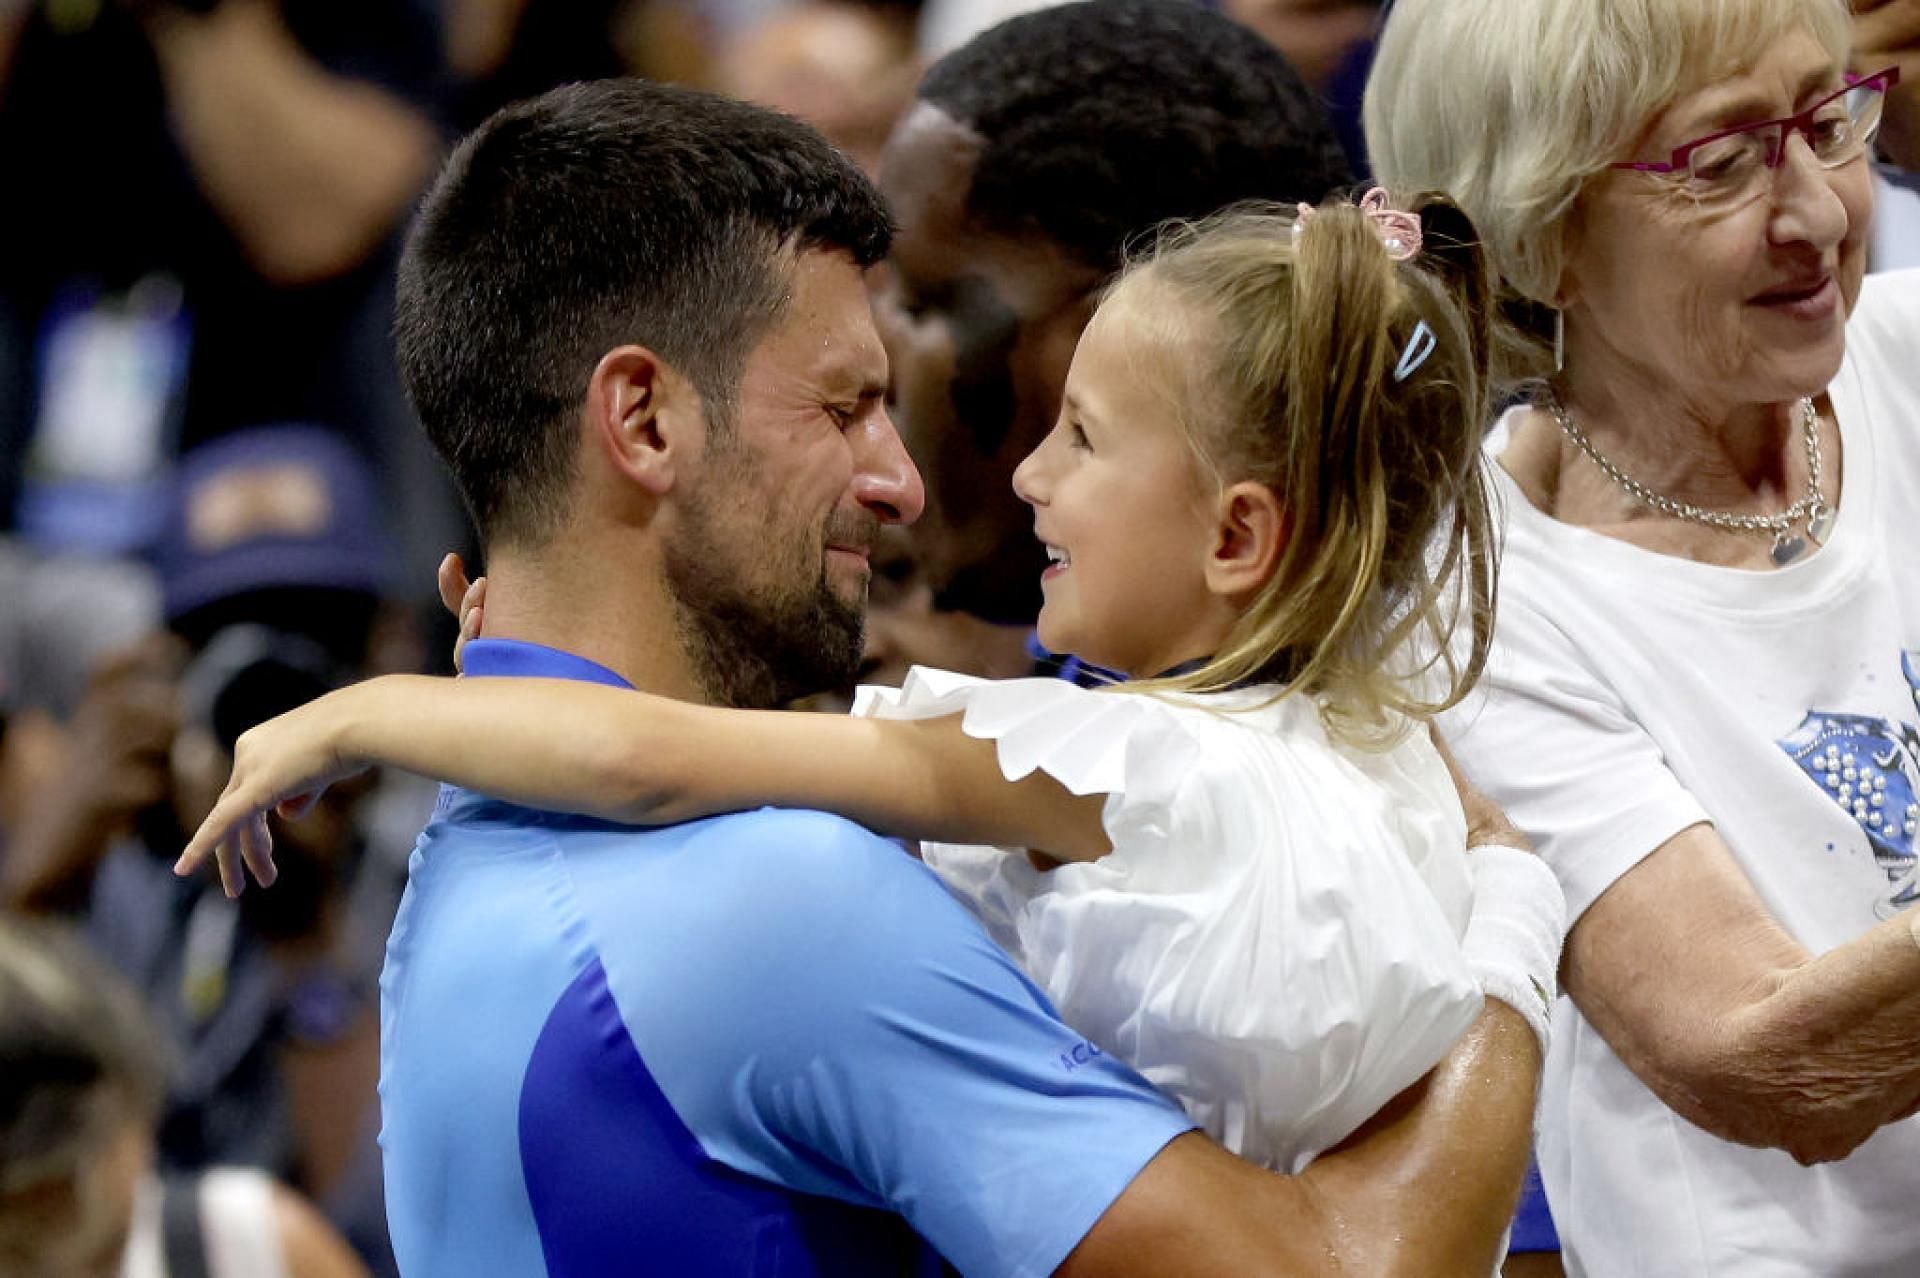 Novak Djokovic has an emotional moment with his 6-year-old daughter Tara